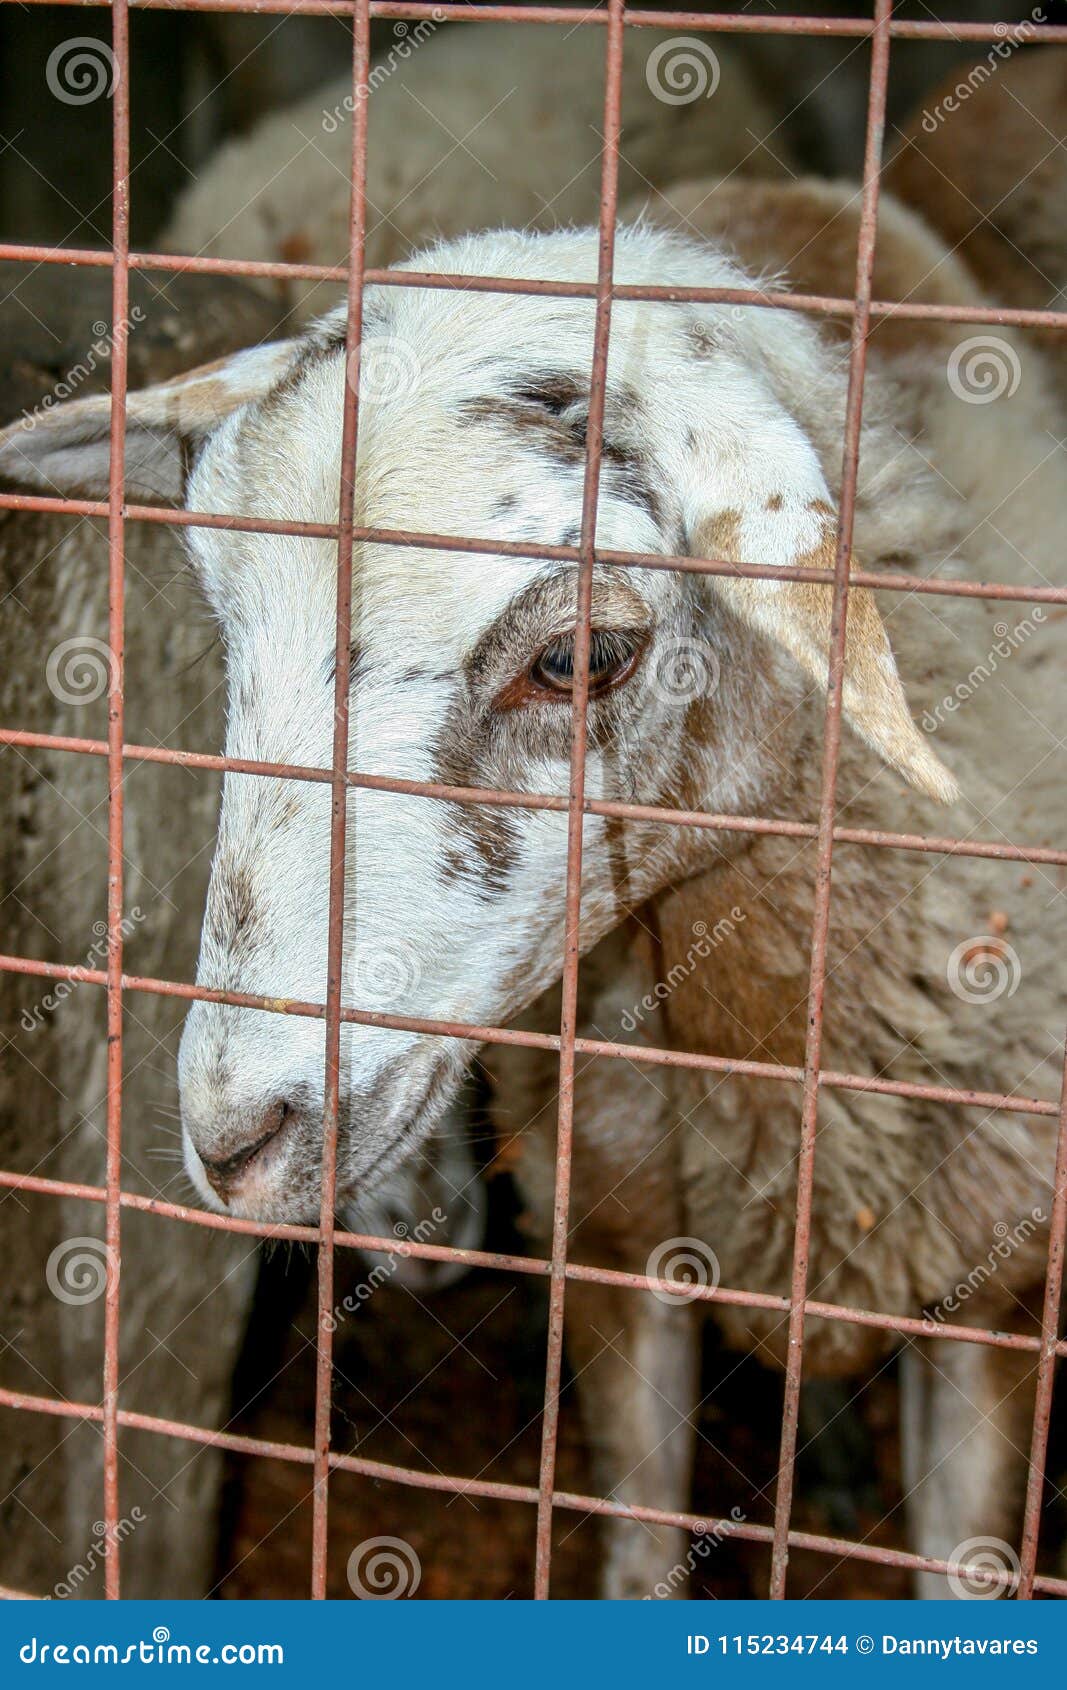 a caged sad white sheep